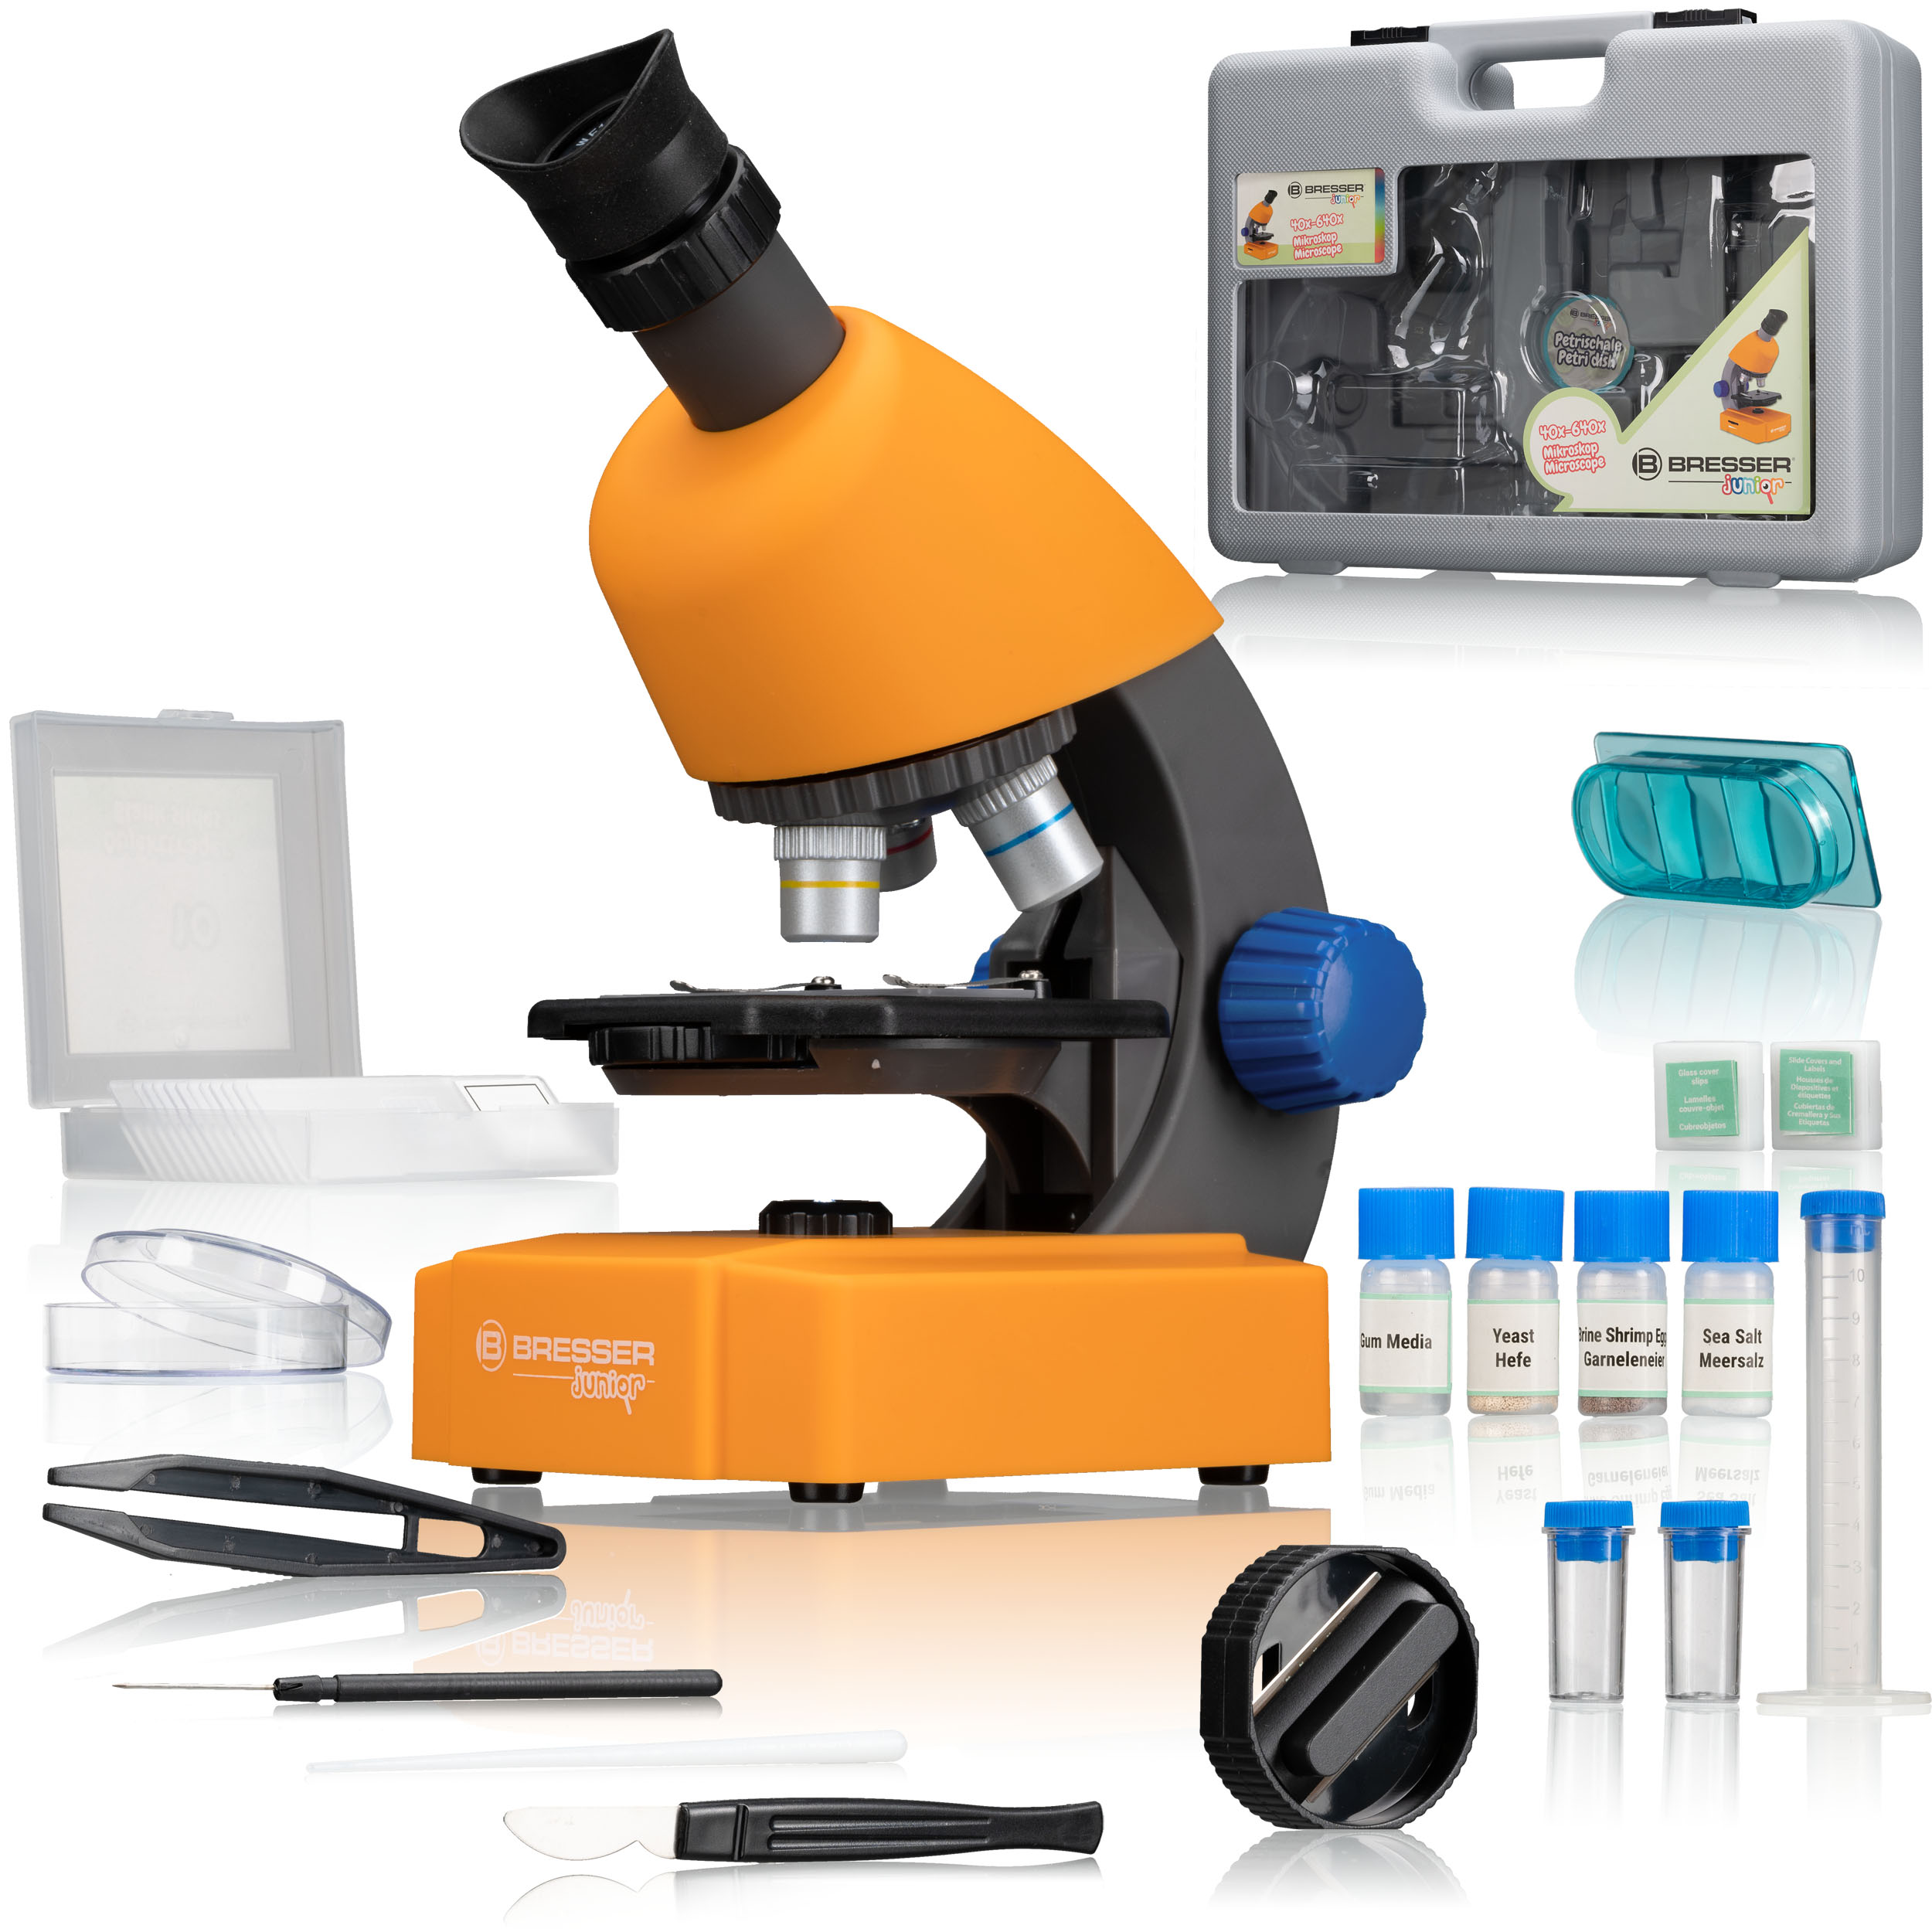 BRESSER JUNIOR Microscope 40x-640x avec accessoire et valise rigide